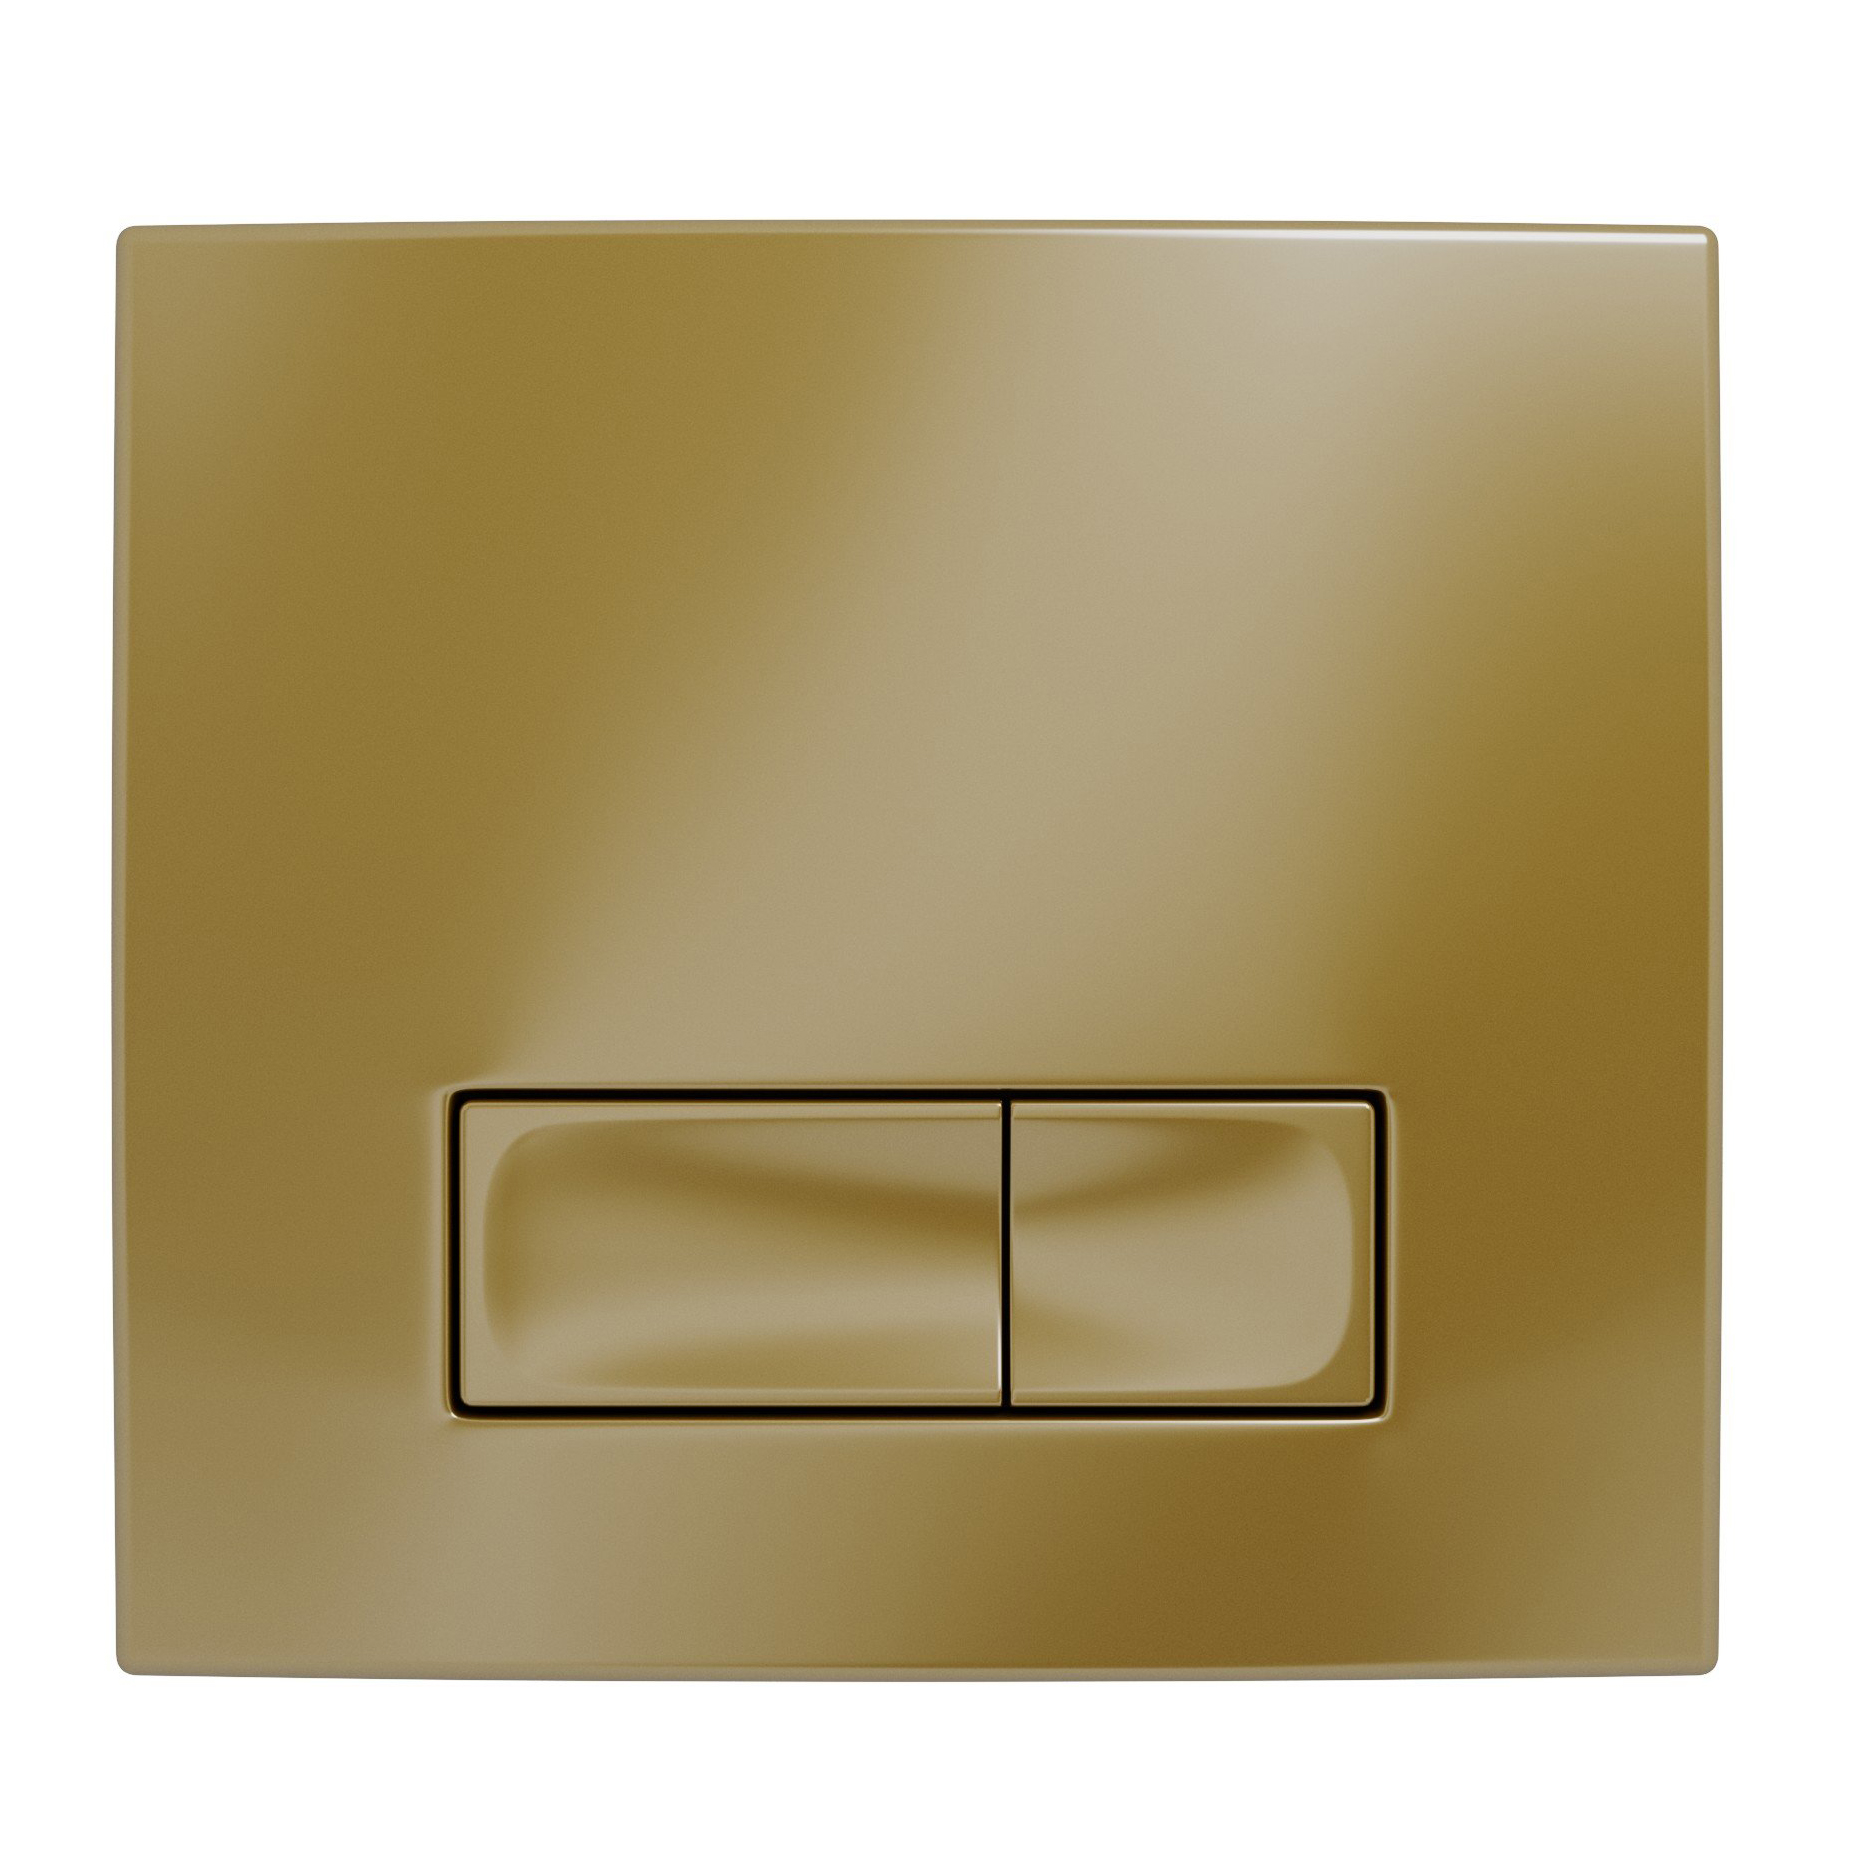 Кнопка для инсталляции Grossman Classic 800.Т1.04.310.310 золото кнопка для инсталляции grossman classic 800 т1 04 000 000